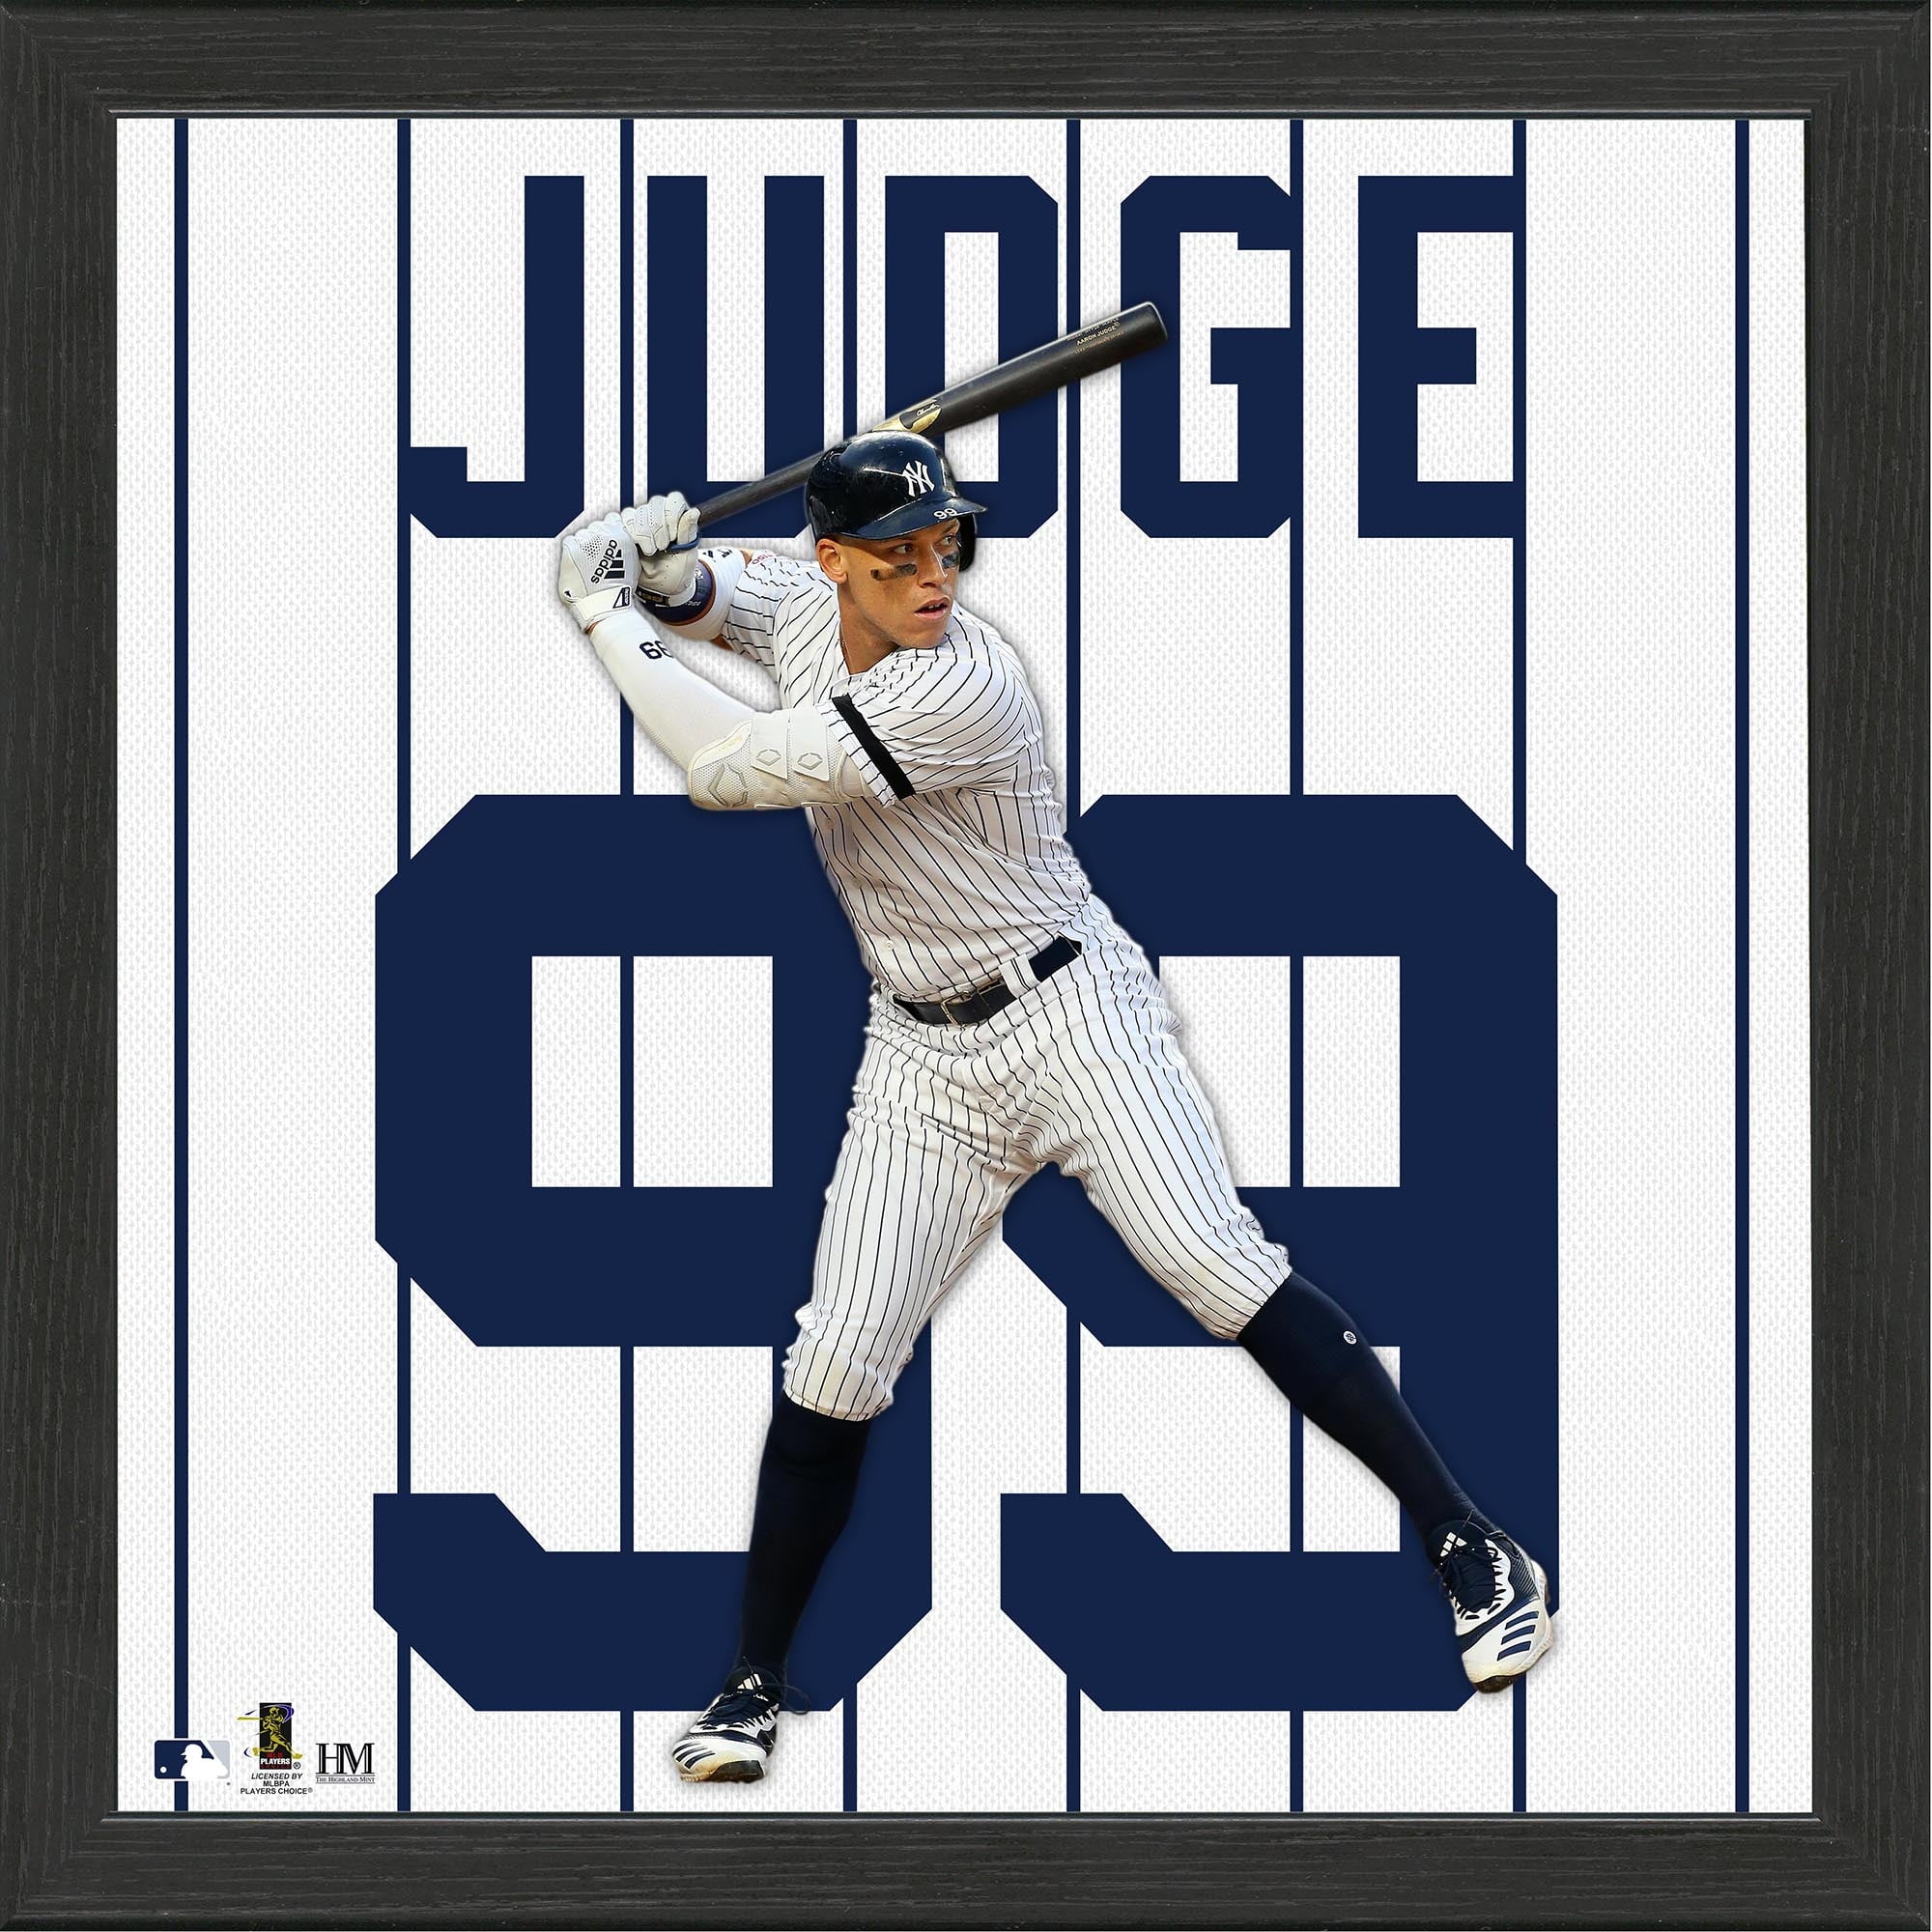 Derek Jeter New York Yankees Mens Replica HOF Patch Jersey - White